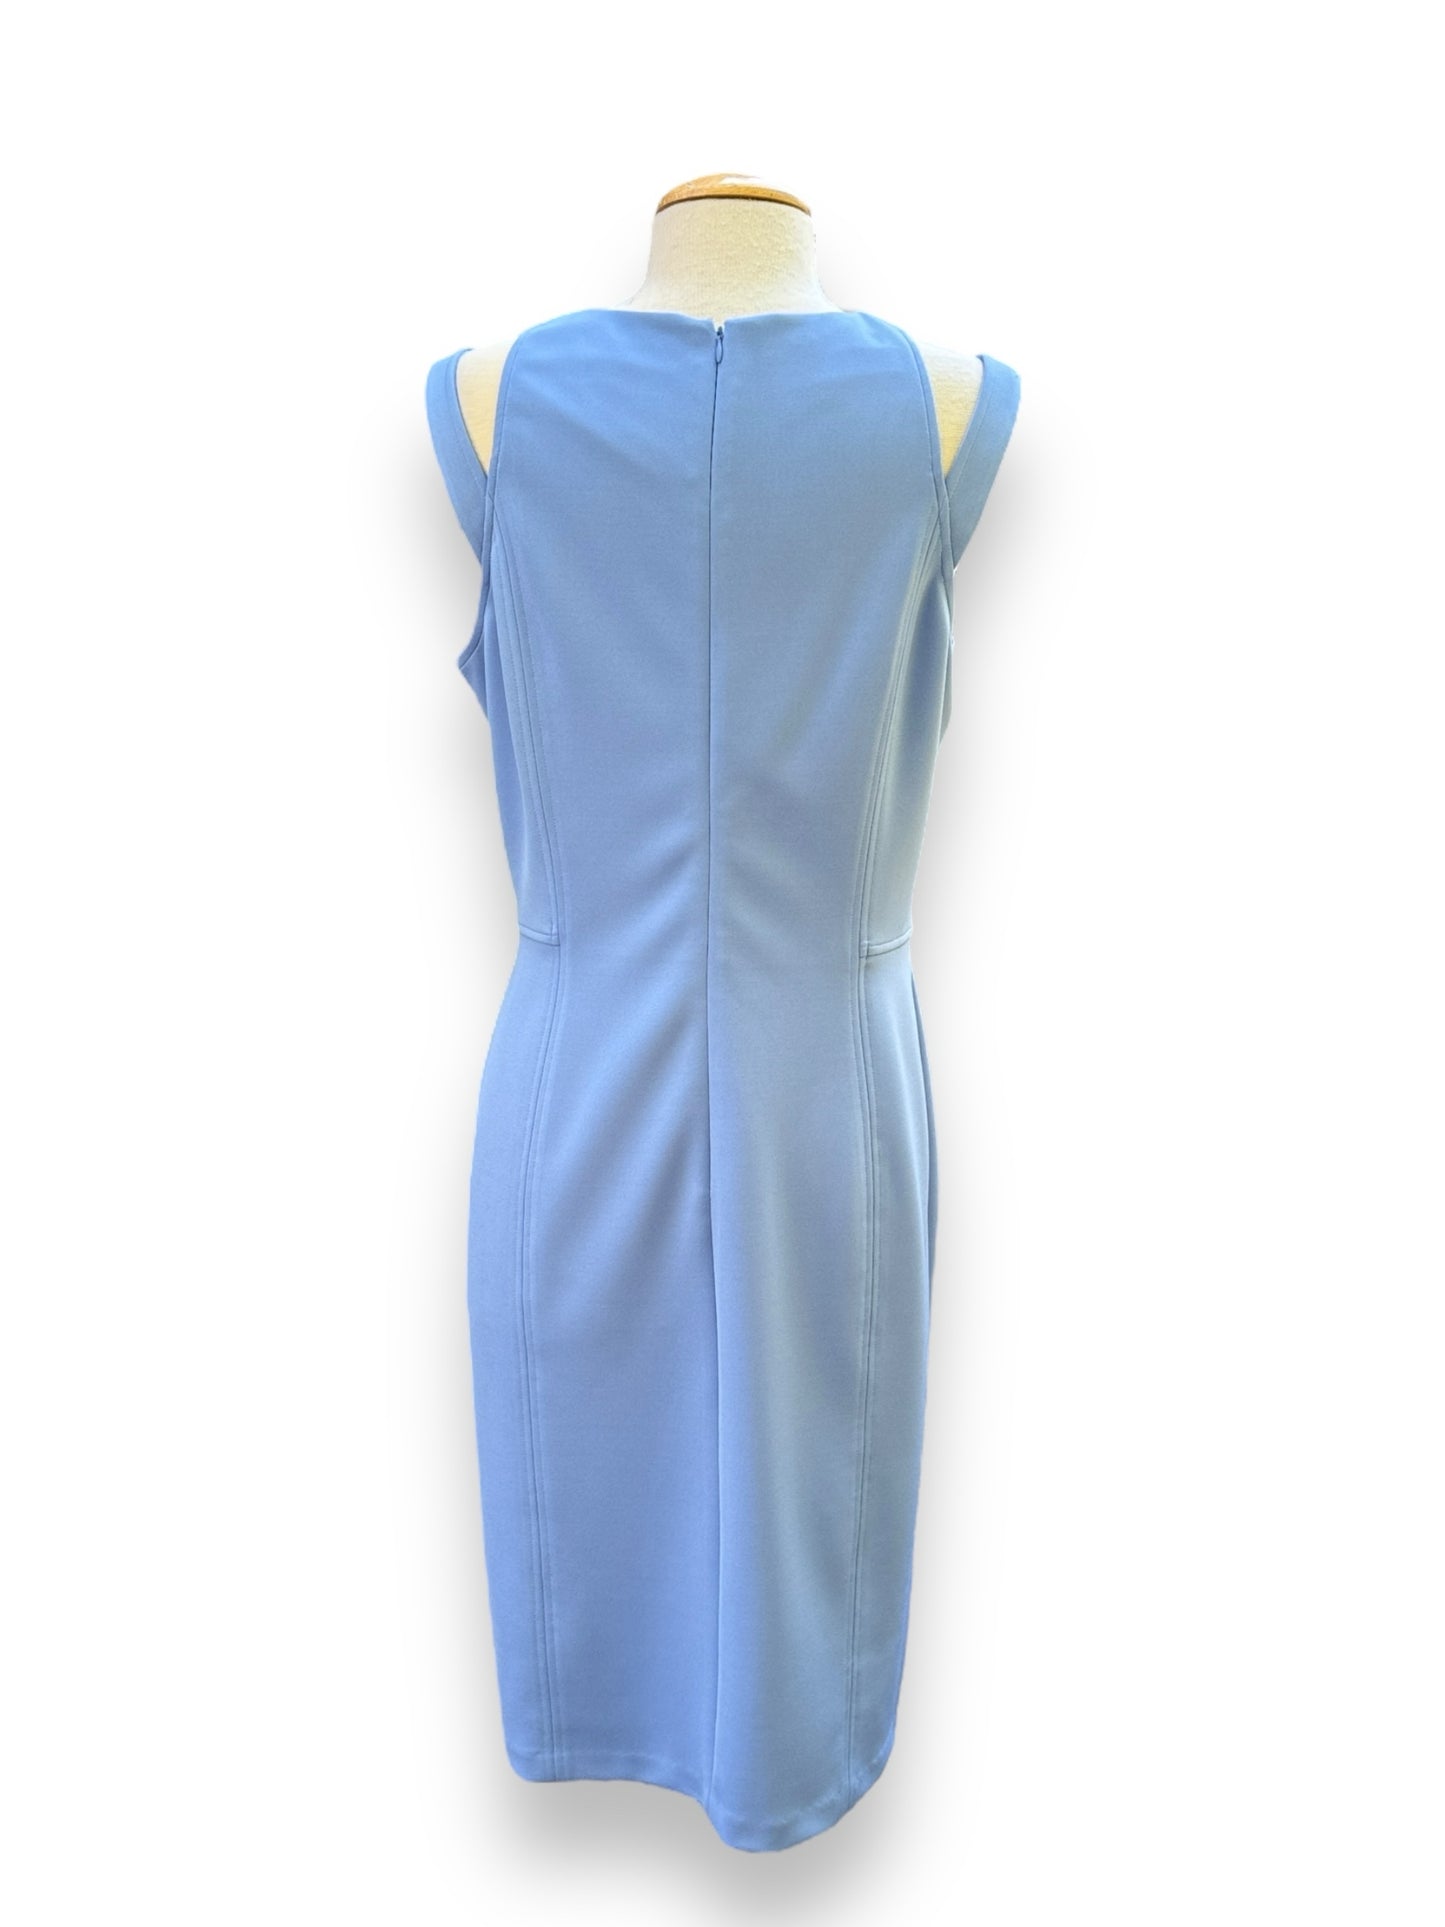 Maggy London - size 14 Blue Dress